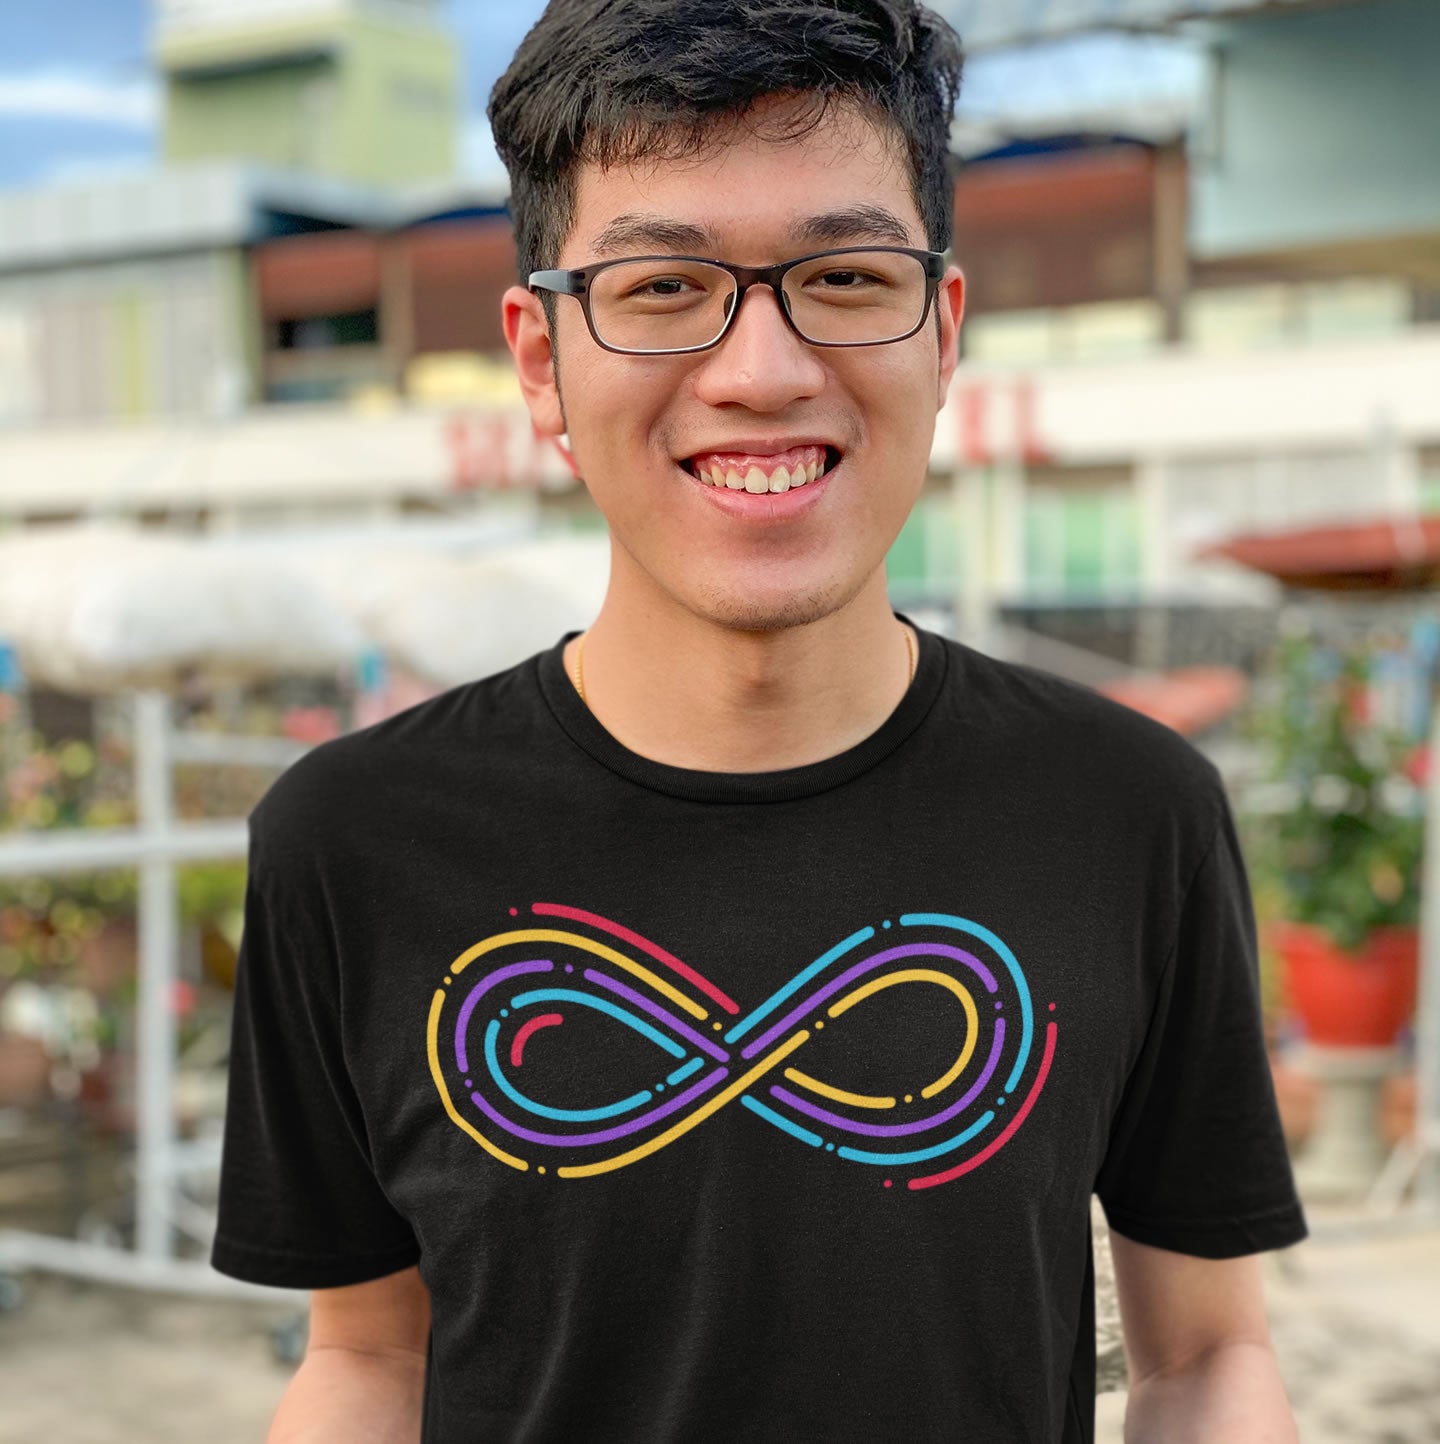 Rainbow Infinity Symbol Autism Shirt